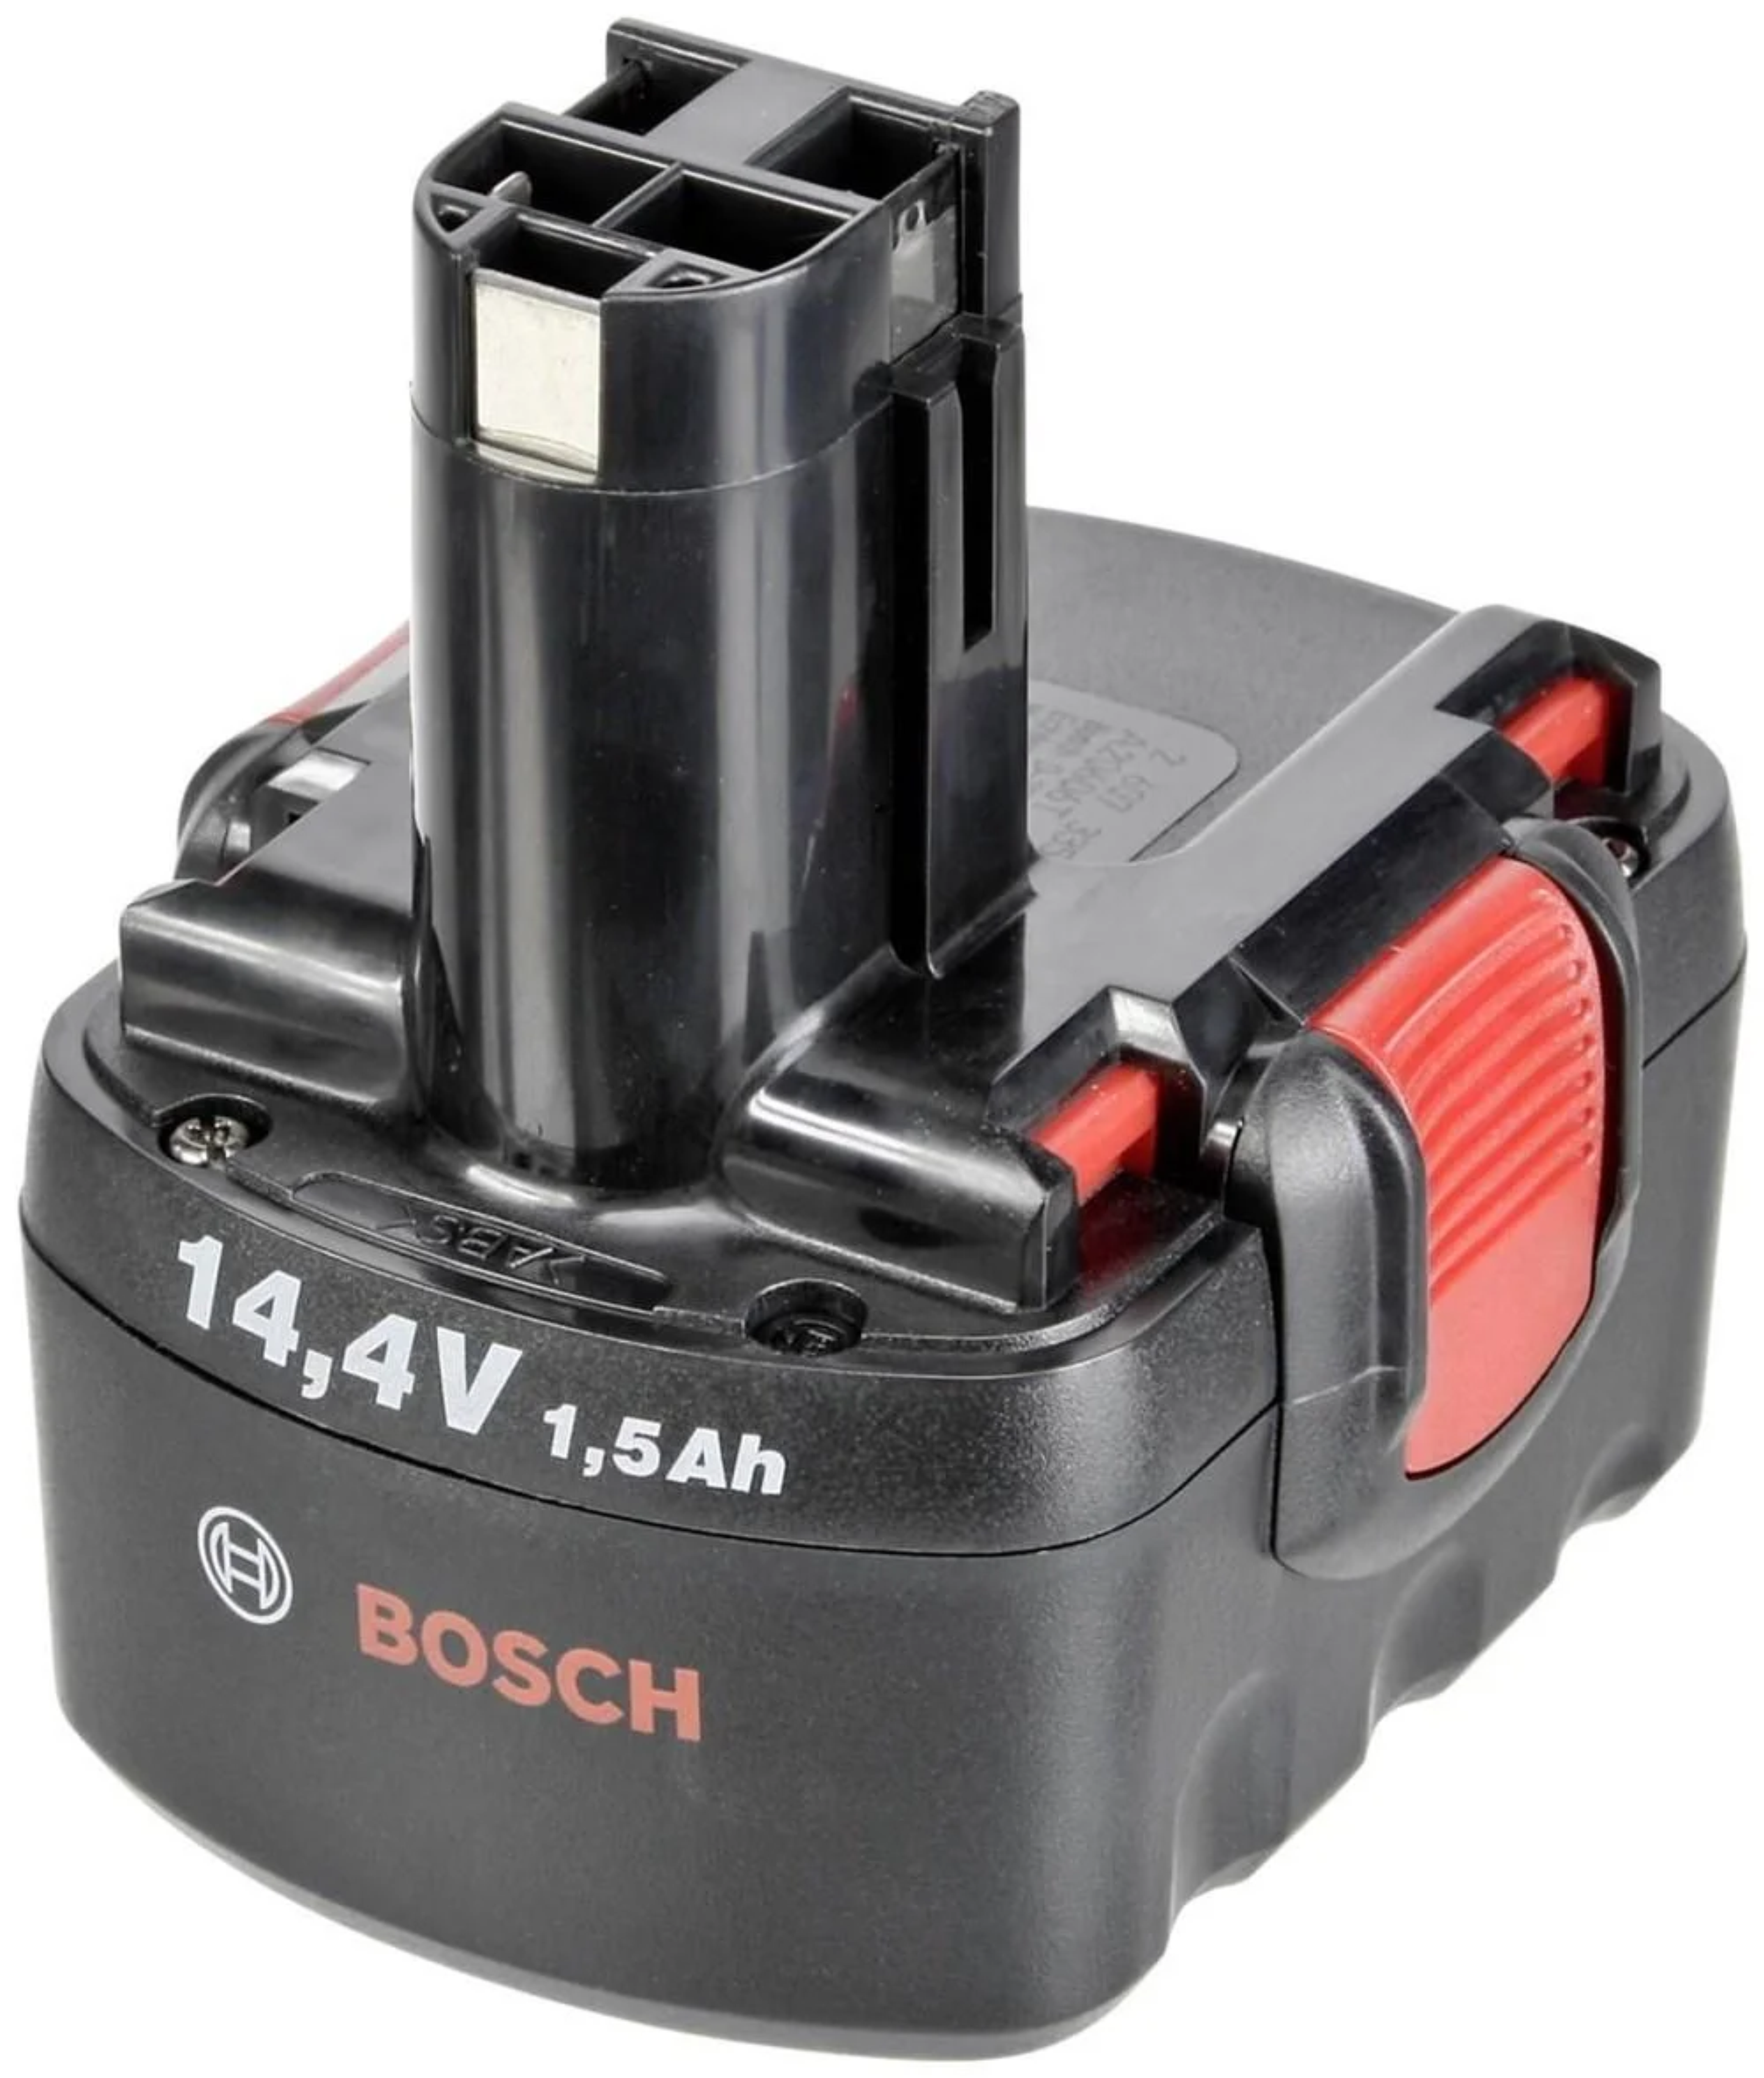 12v 1.5 ah. Аккумулятор для шуруповерта Bosch 14.4v 1.5Ah. Аккумуляторная батарея 14.4 в 1.5 Ач бош. Шуруповерта Bosch 14.4v 1.5Ah. Аккумулятор для шуруповерта бош 14.4.